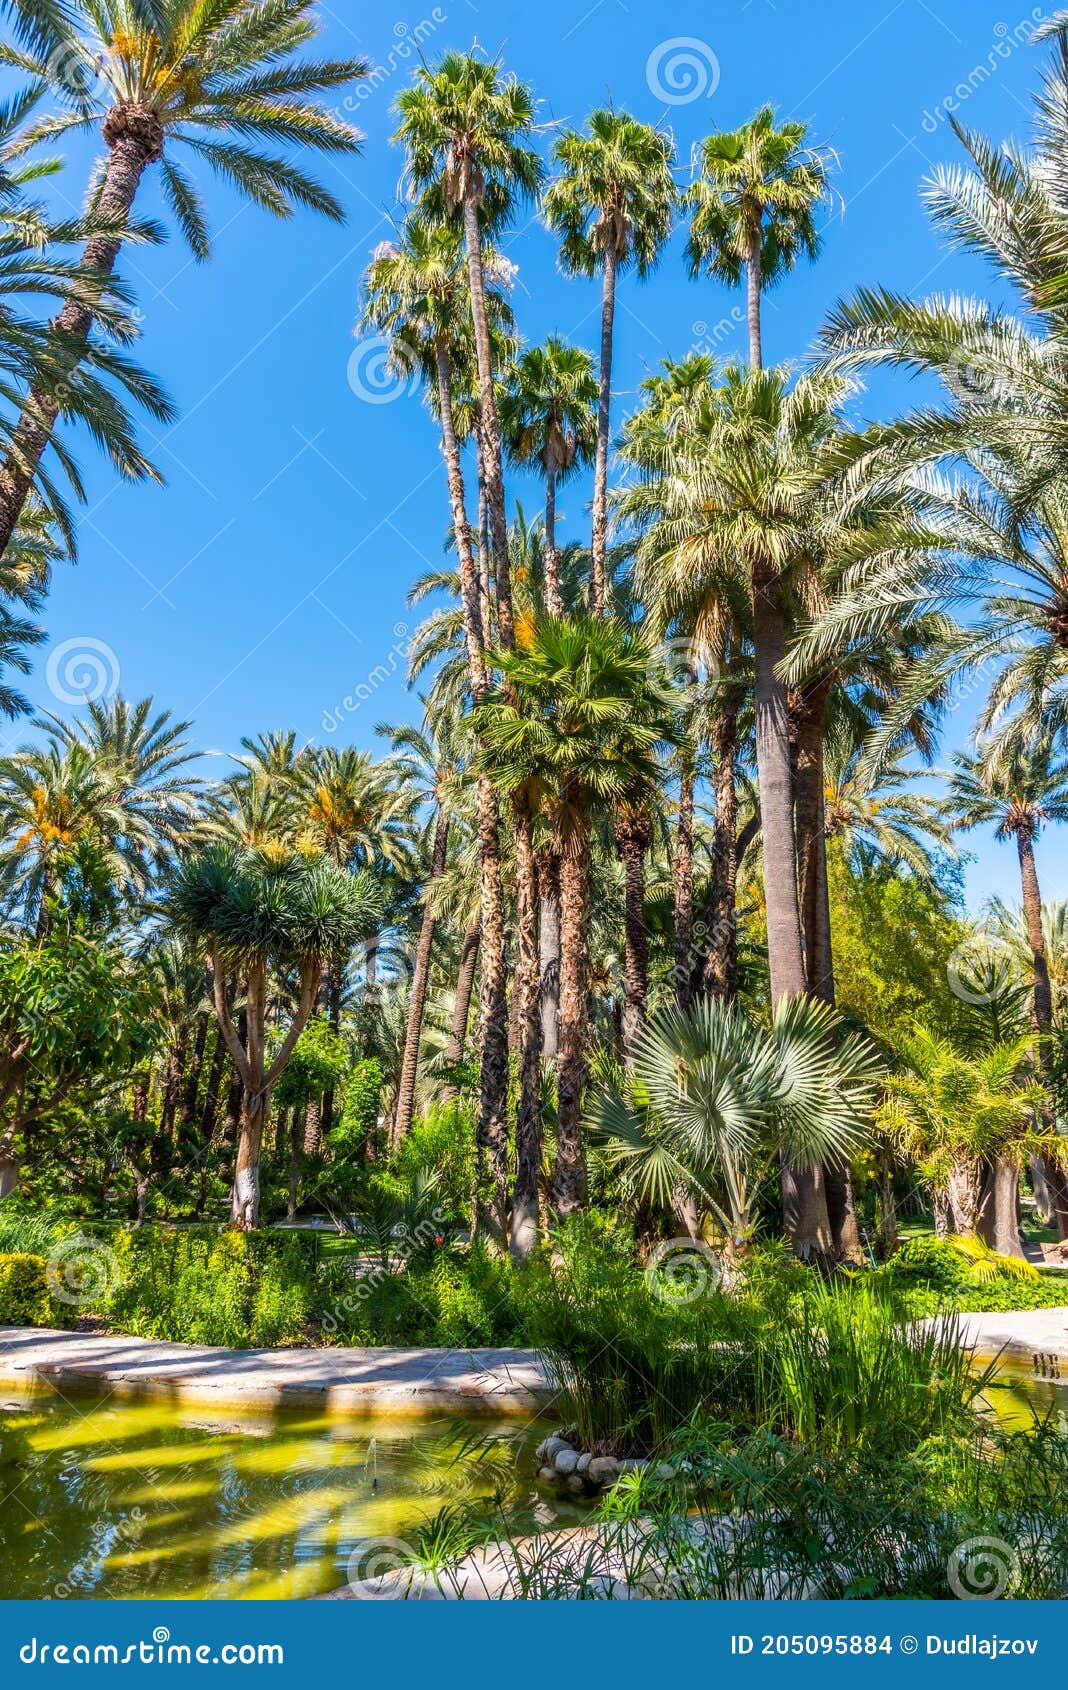 palm groves at huerto del cura garden in elche